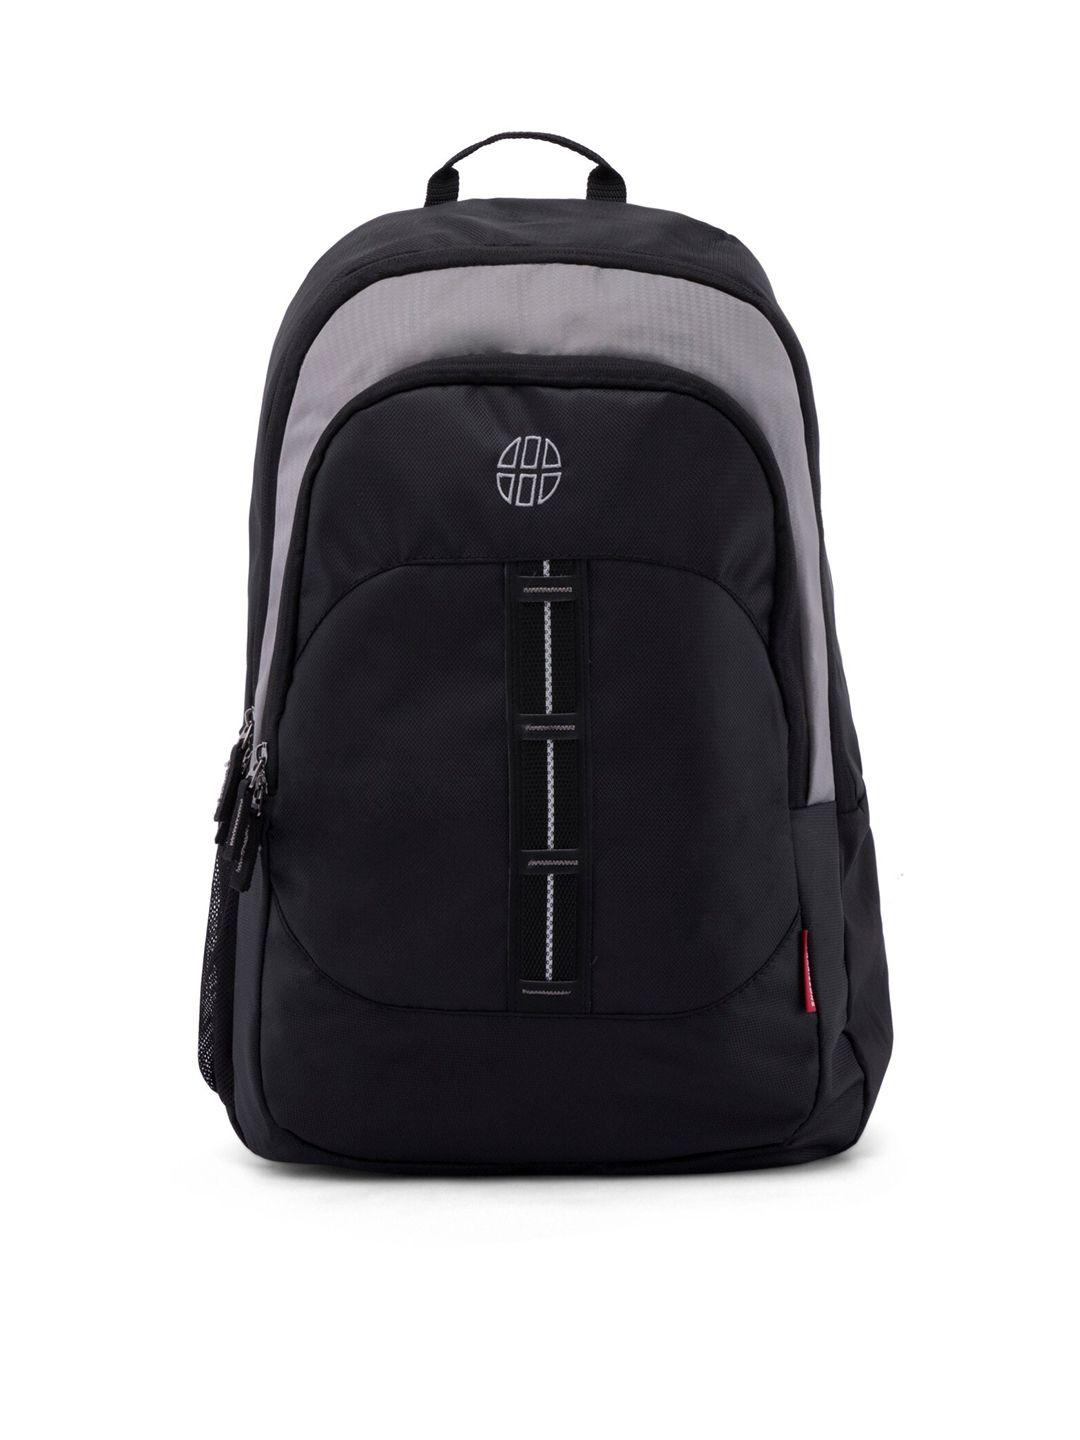 harissons unisex black & grey colourblocked backpack